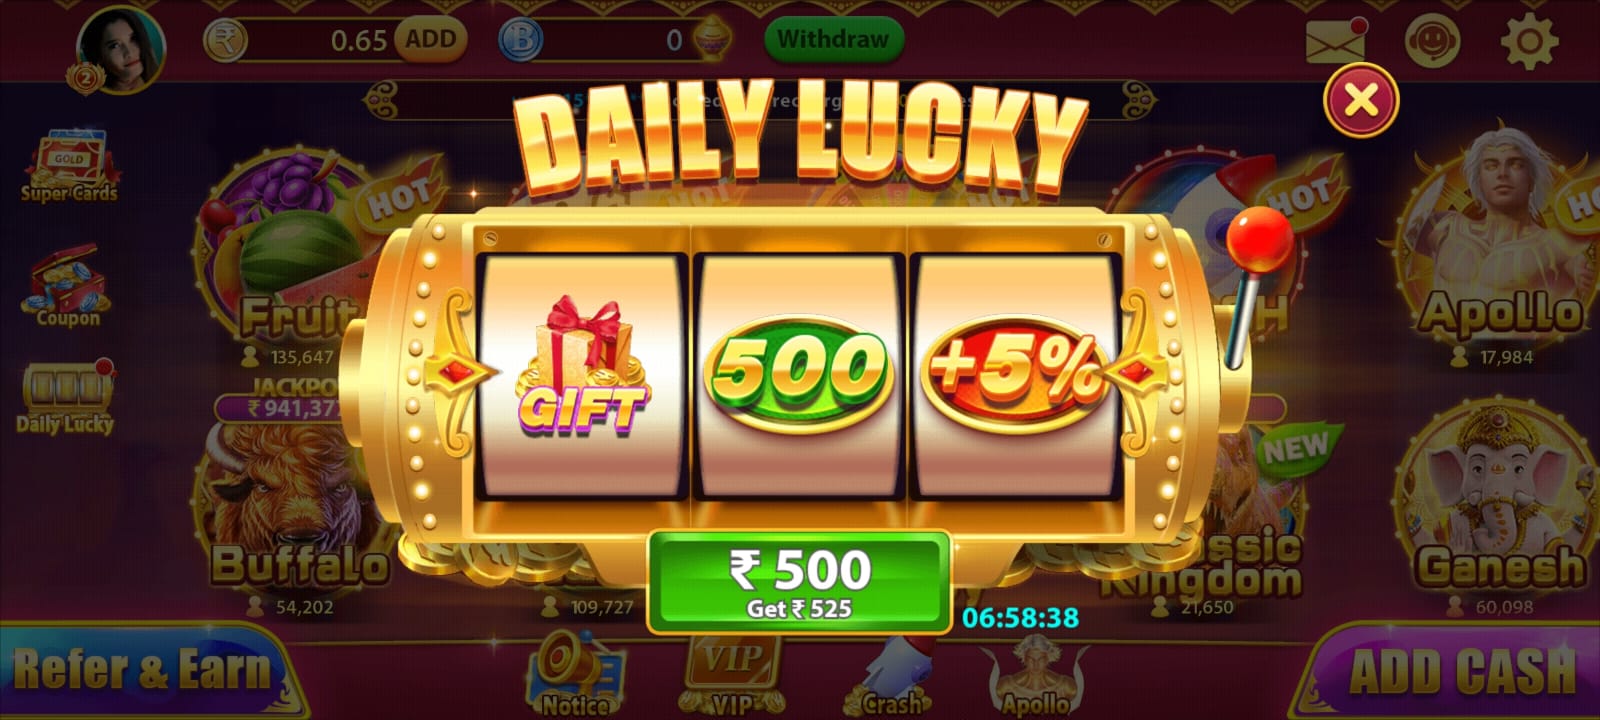 Slots Mega Casino Daily Bonus